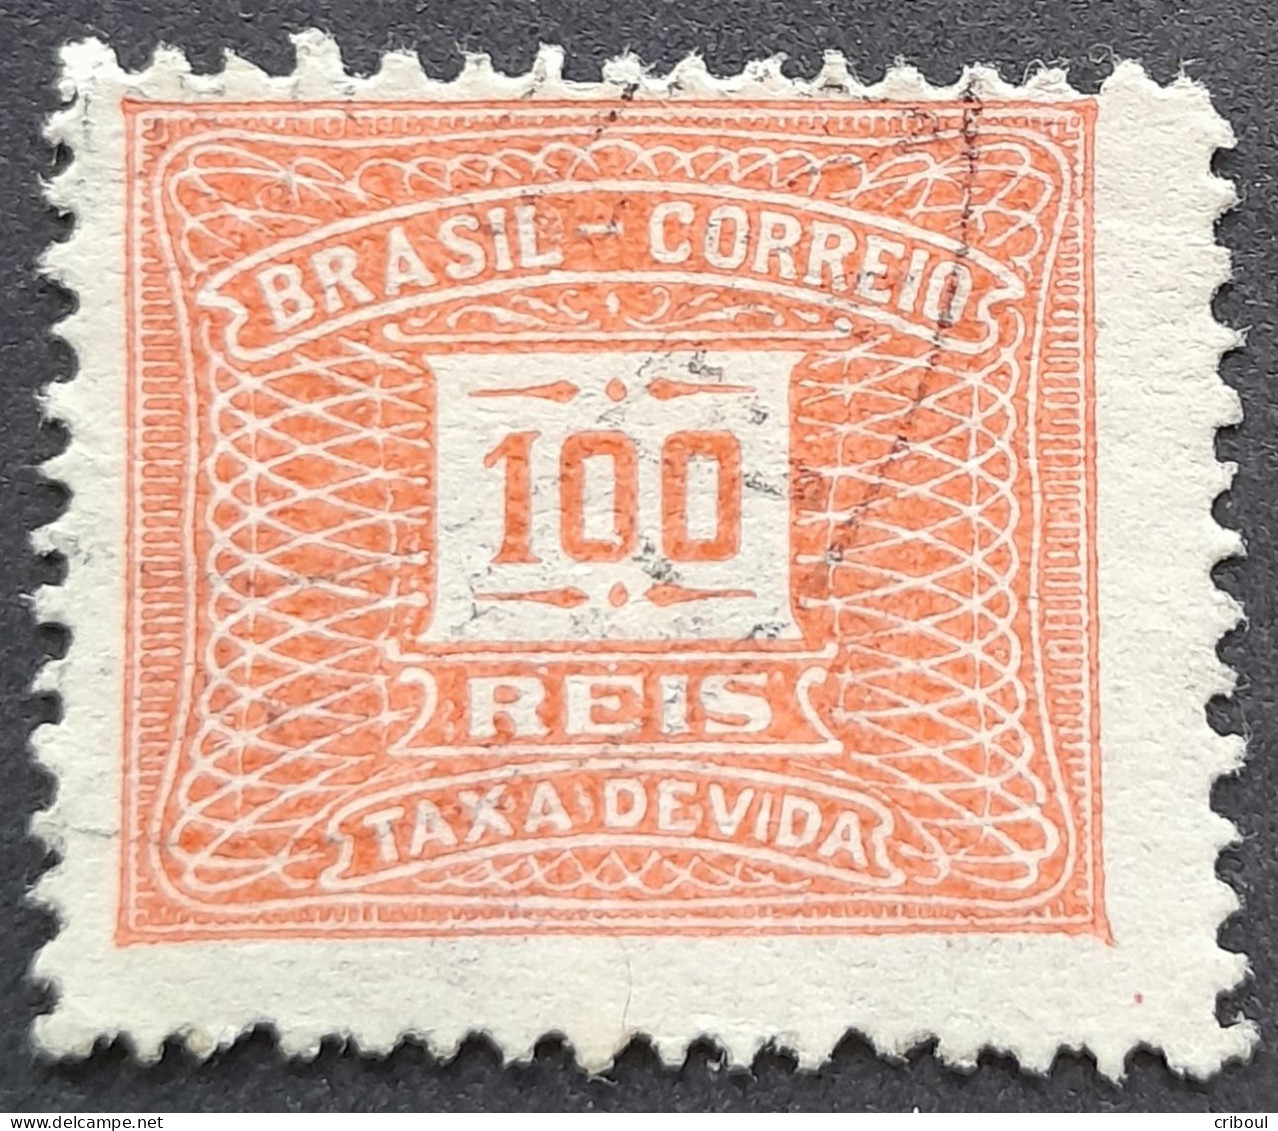 Bresil Brasil Brazil 1919 Taxe Tax Taxa Yvert 44d O Used - Postage Due